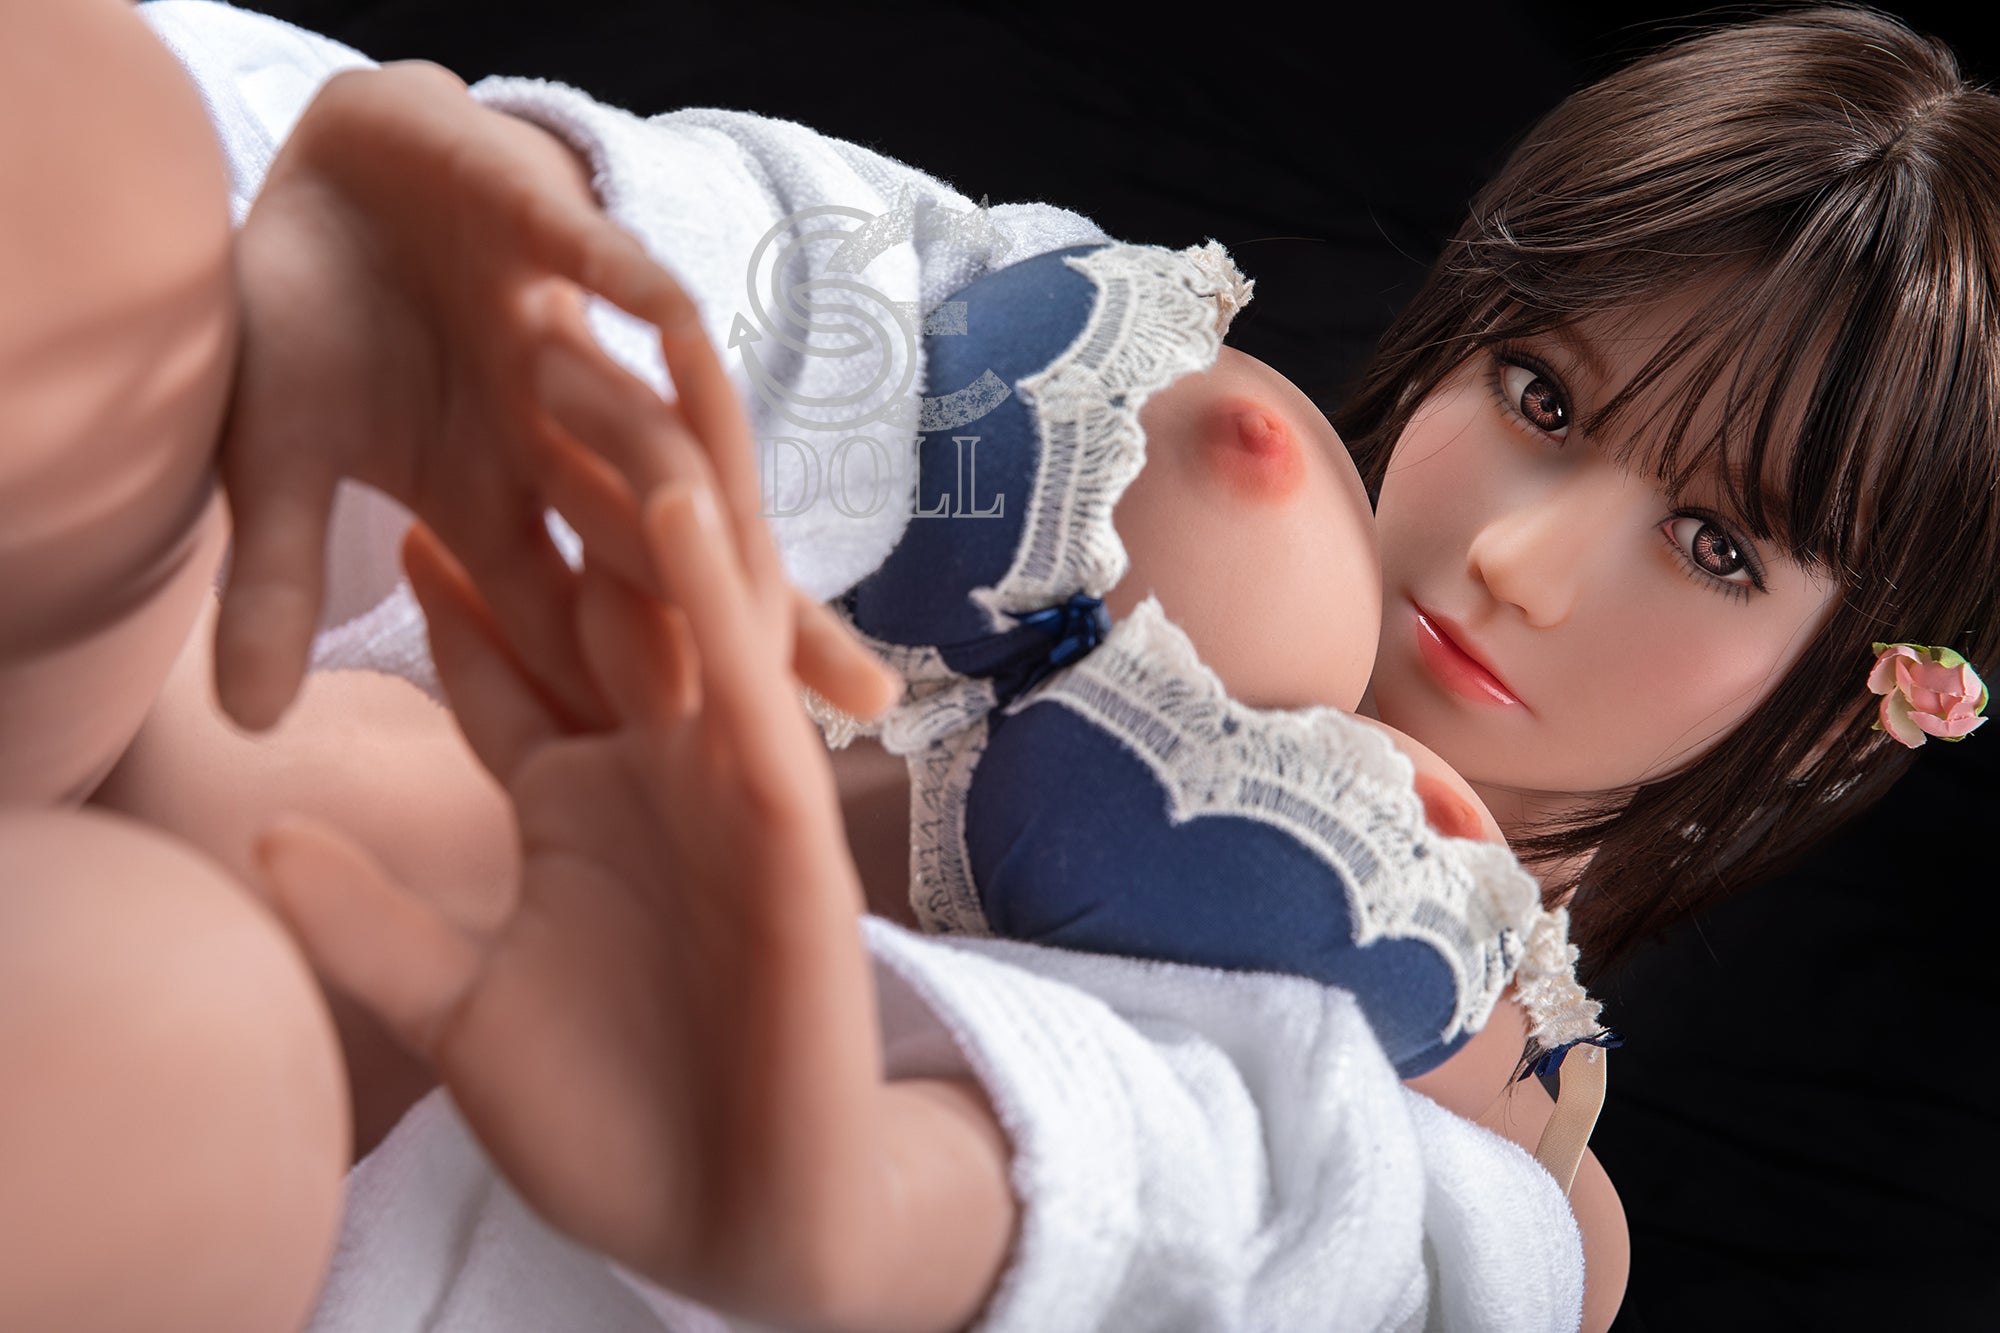 SEDOLL 161 cm F TPE - Mio | Buy Sex Dolls at DOLLS ACTUALLY